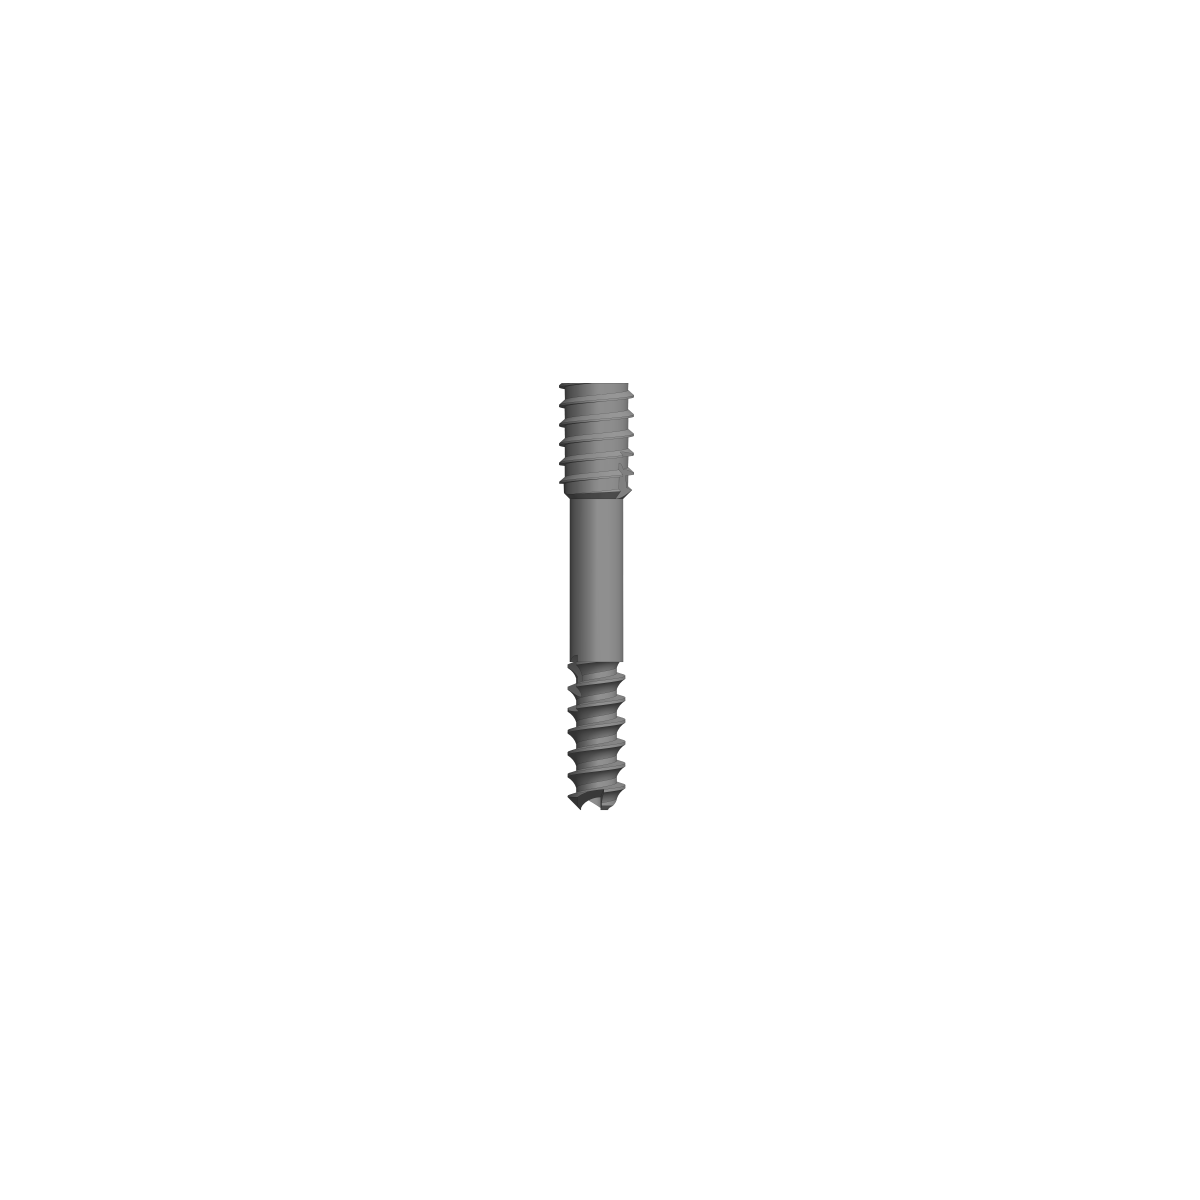 2.7mm / 3.5mm Cannulated Screw – Titanium